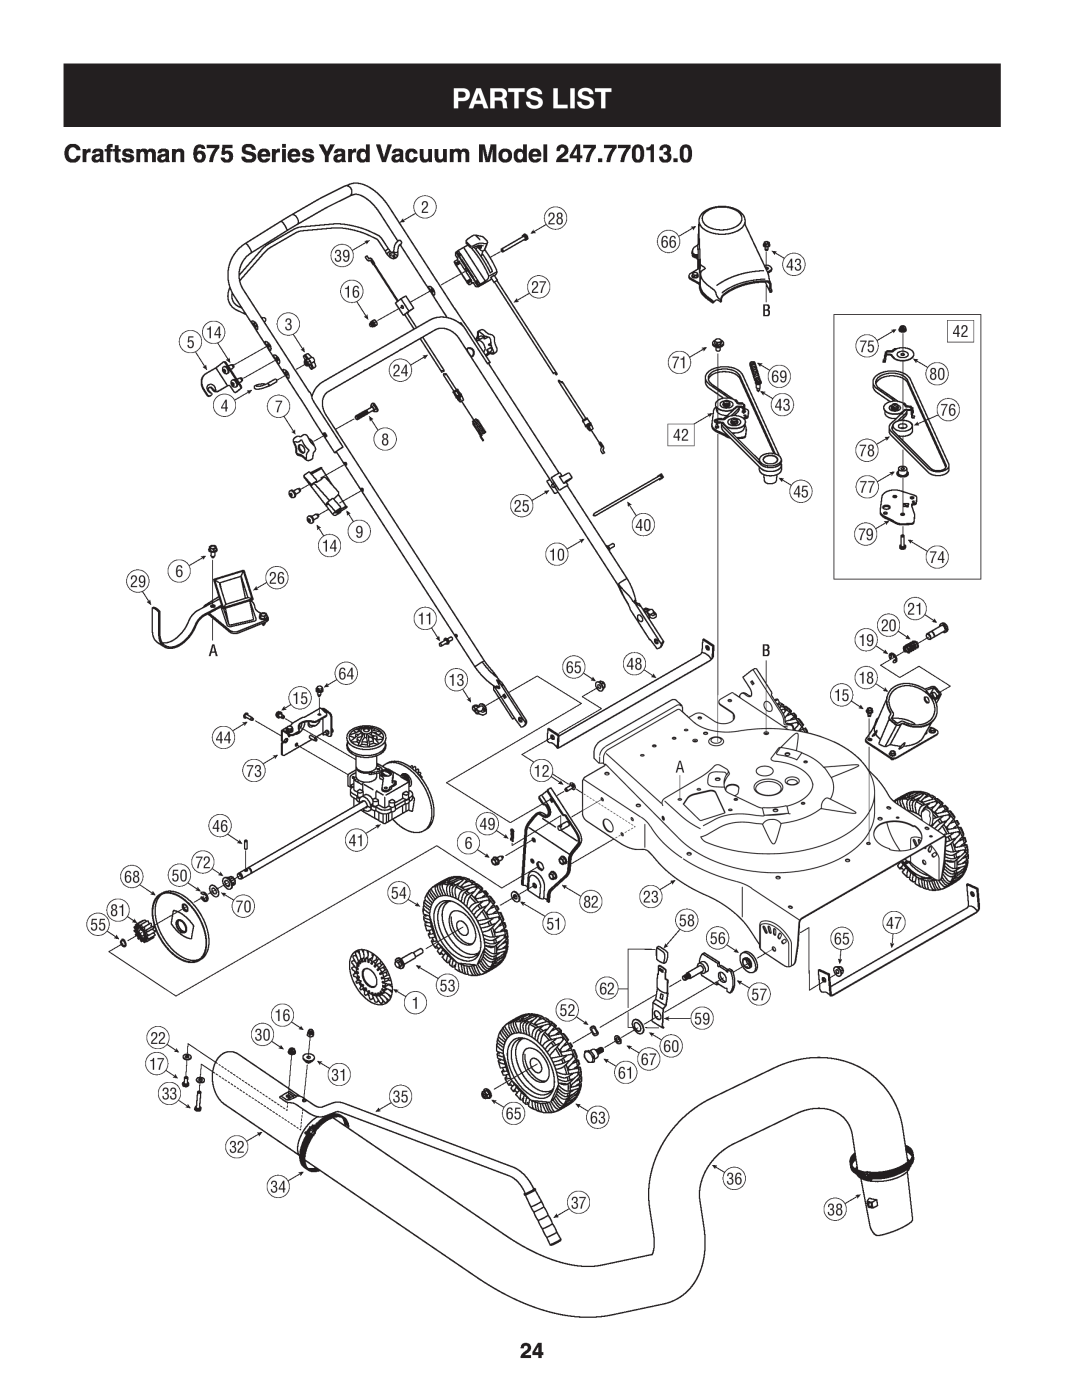 Craftsman 247.77013.0 manual Parts List, Craftsman 675 Series Yard Vacuum Model 